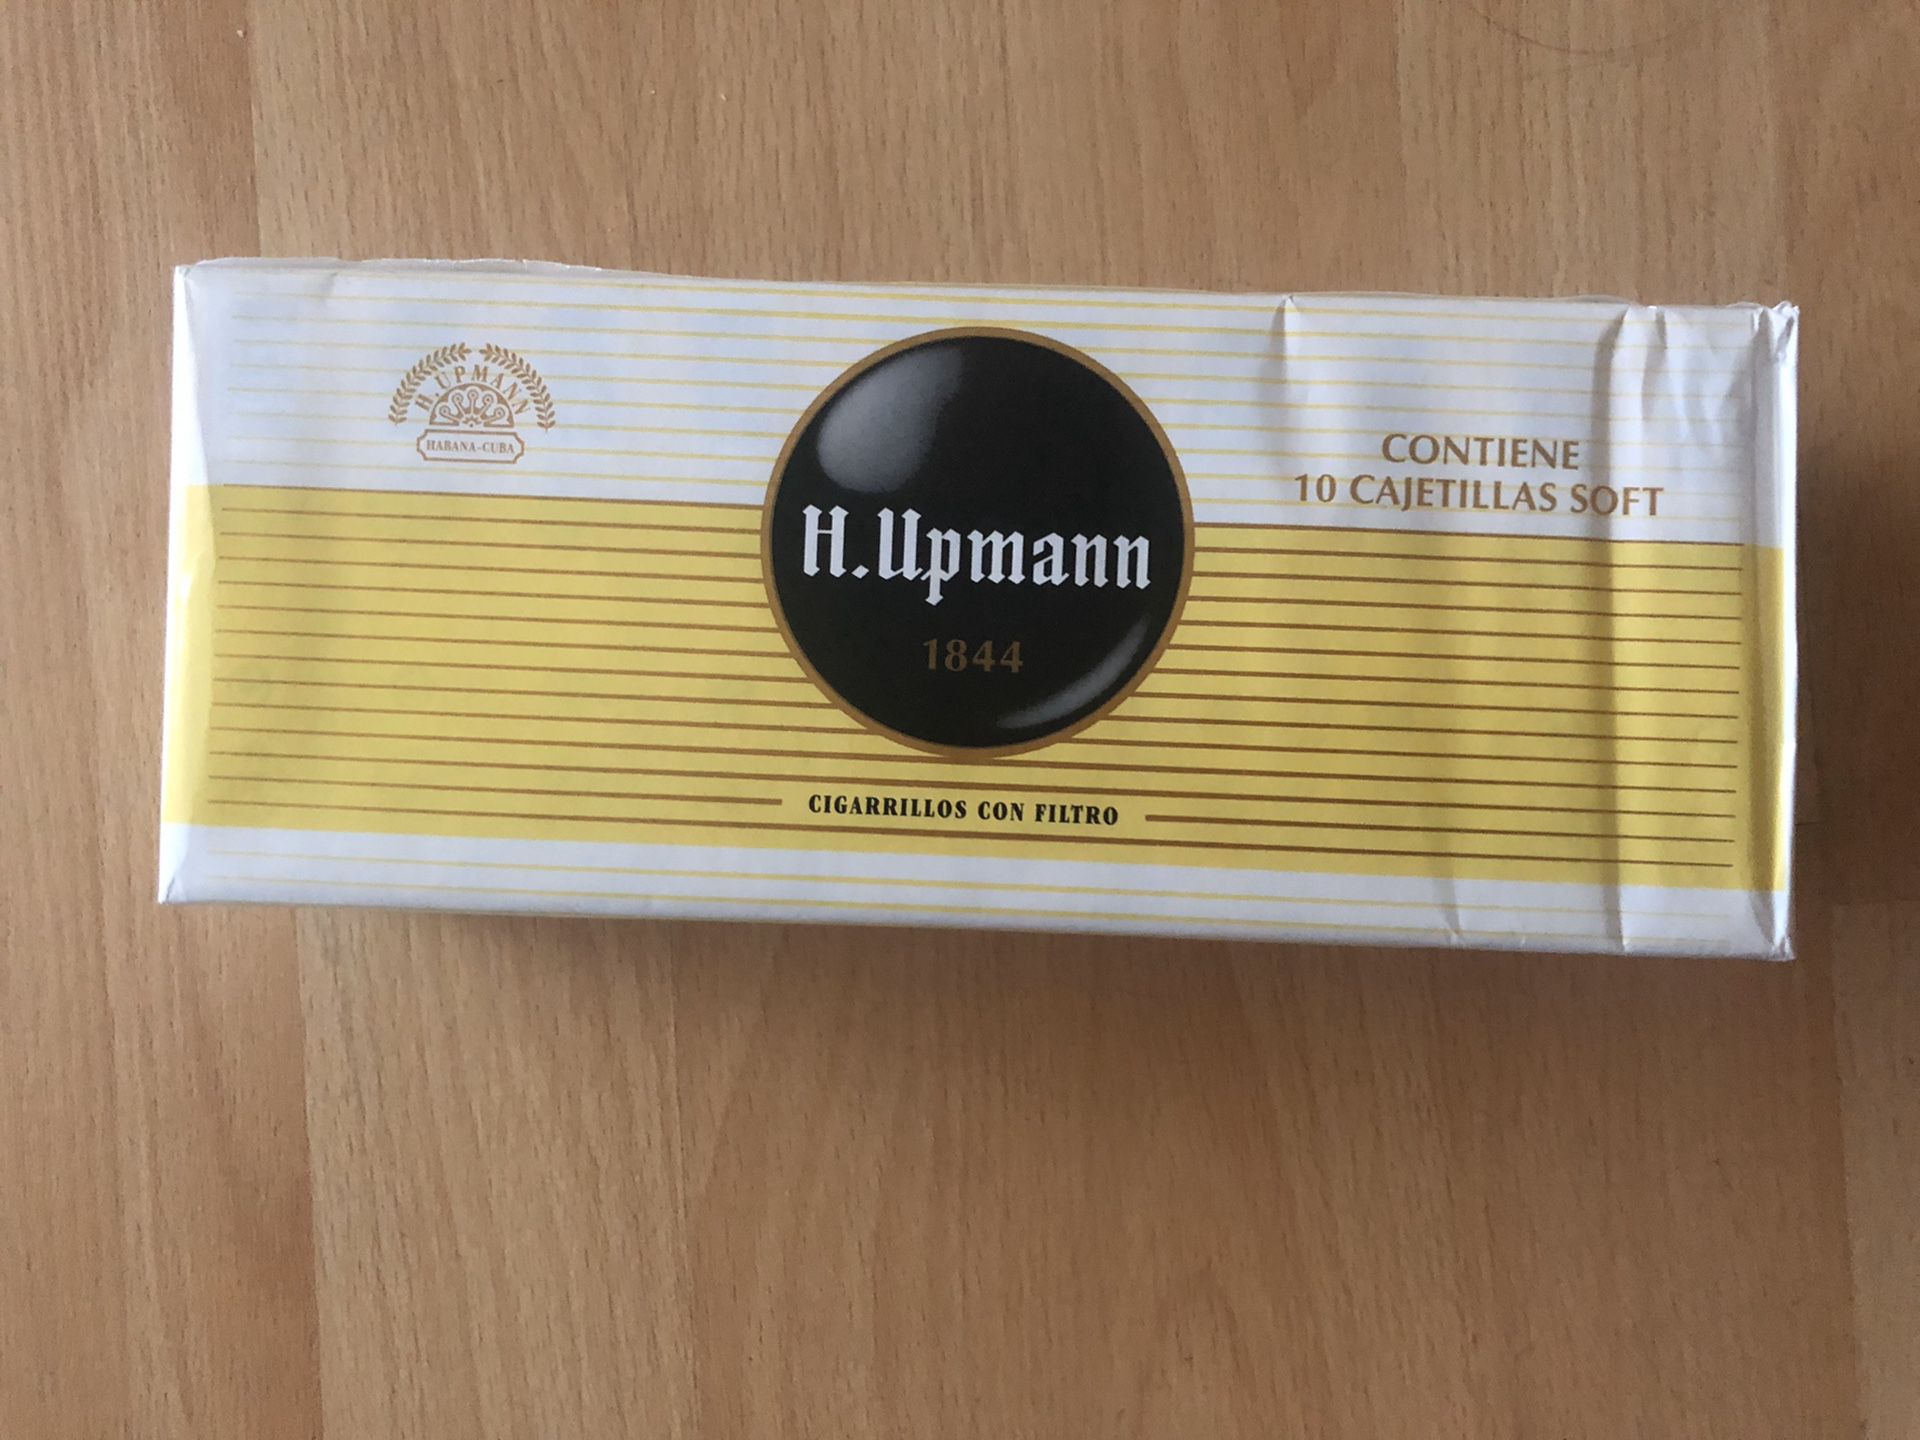 H.hpmann cigarros